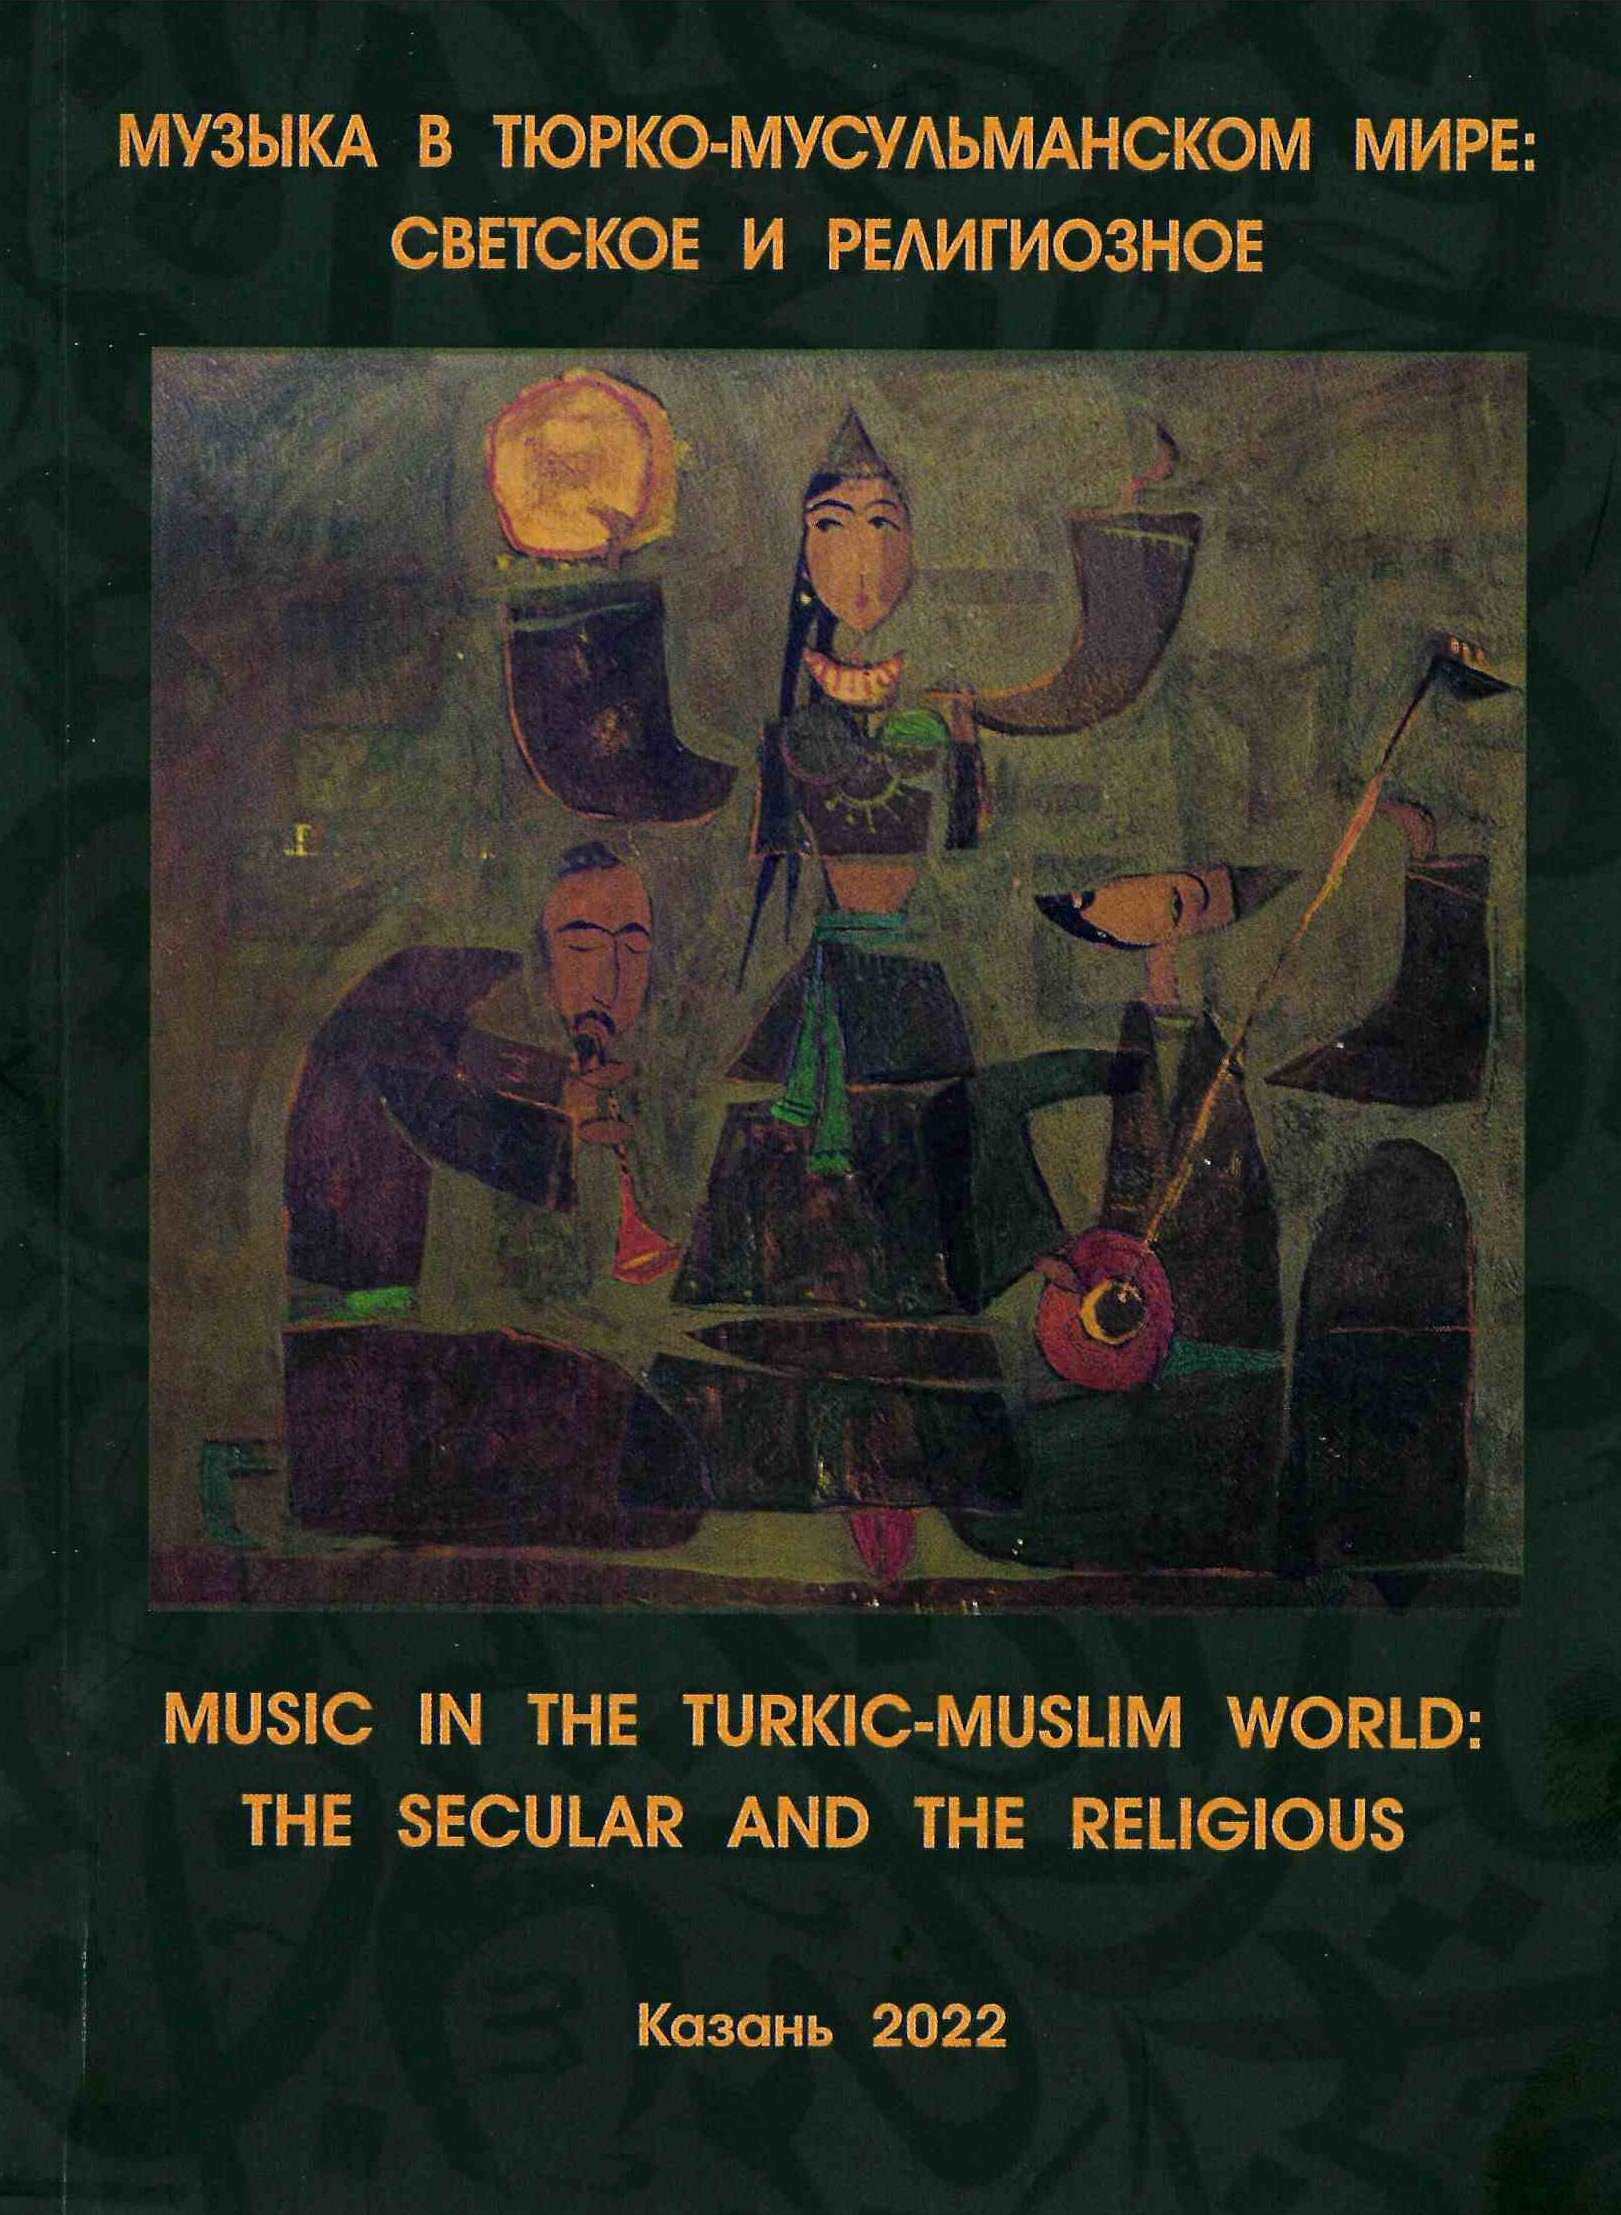 Music in the Turkic Muslim world